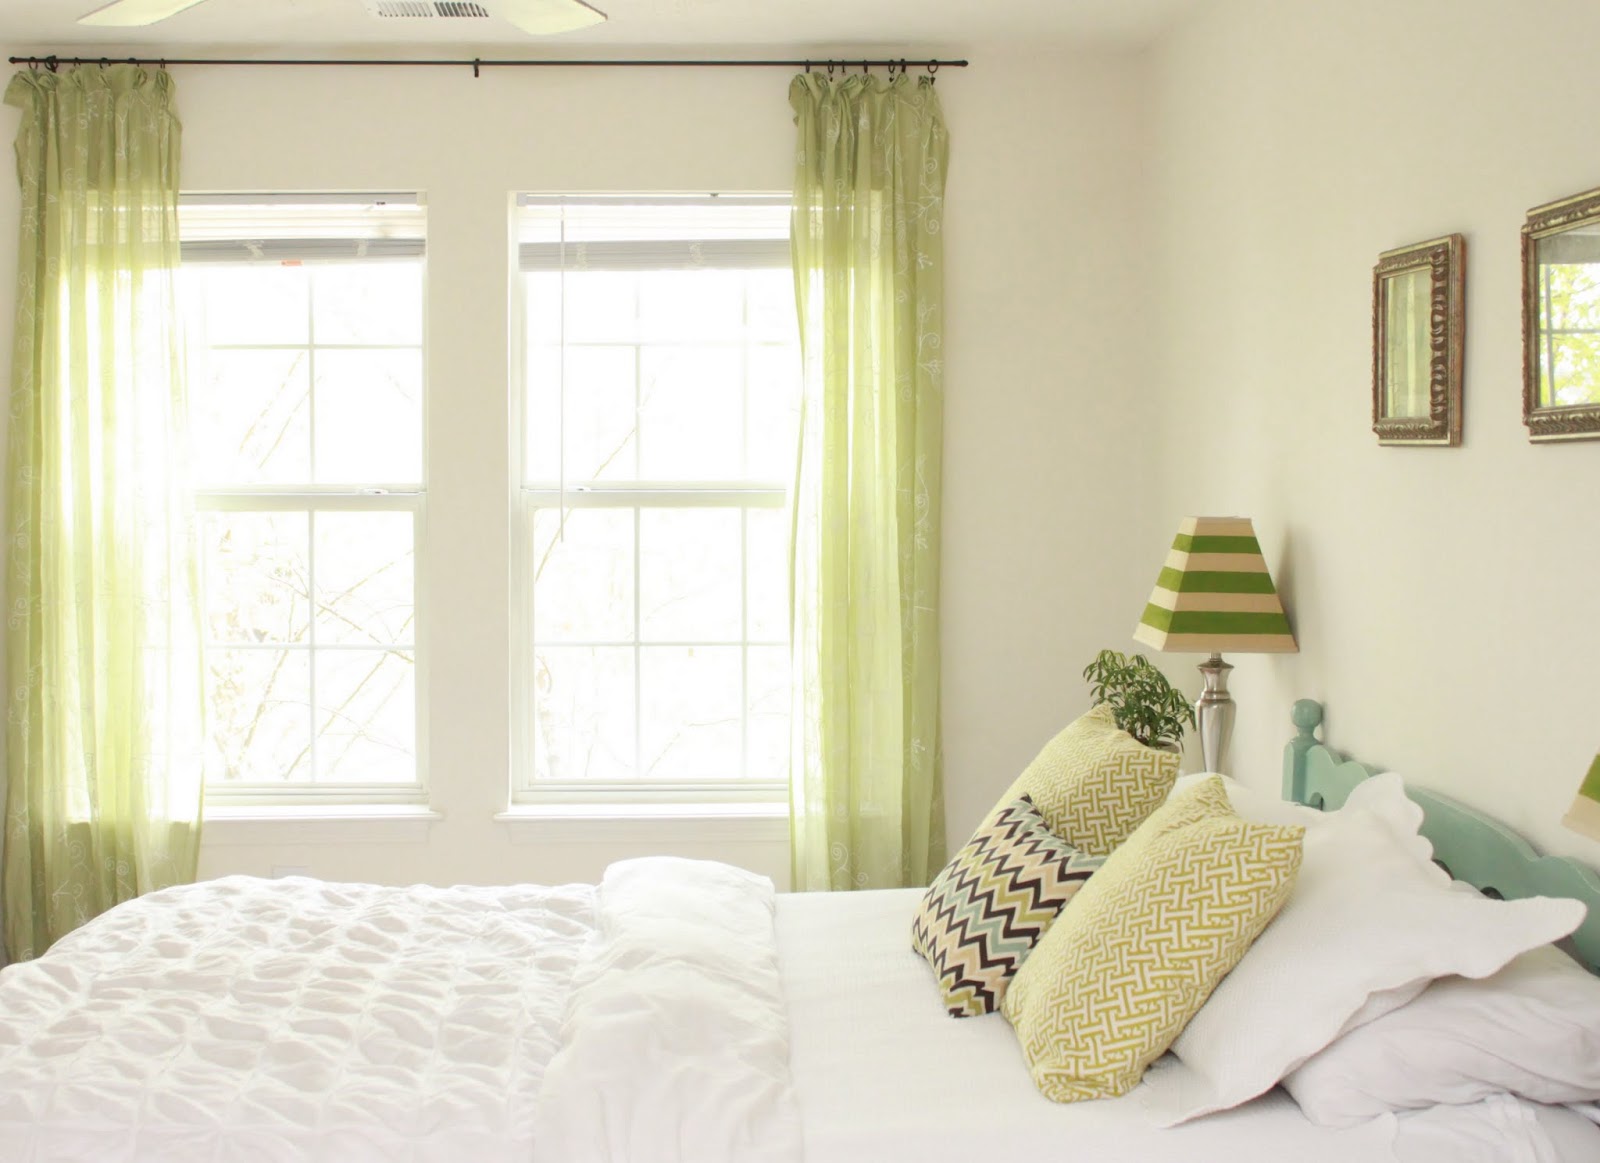 Apartment Bedroom Ideas Pinterest